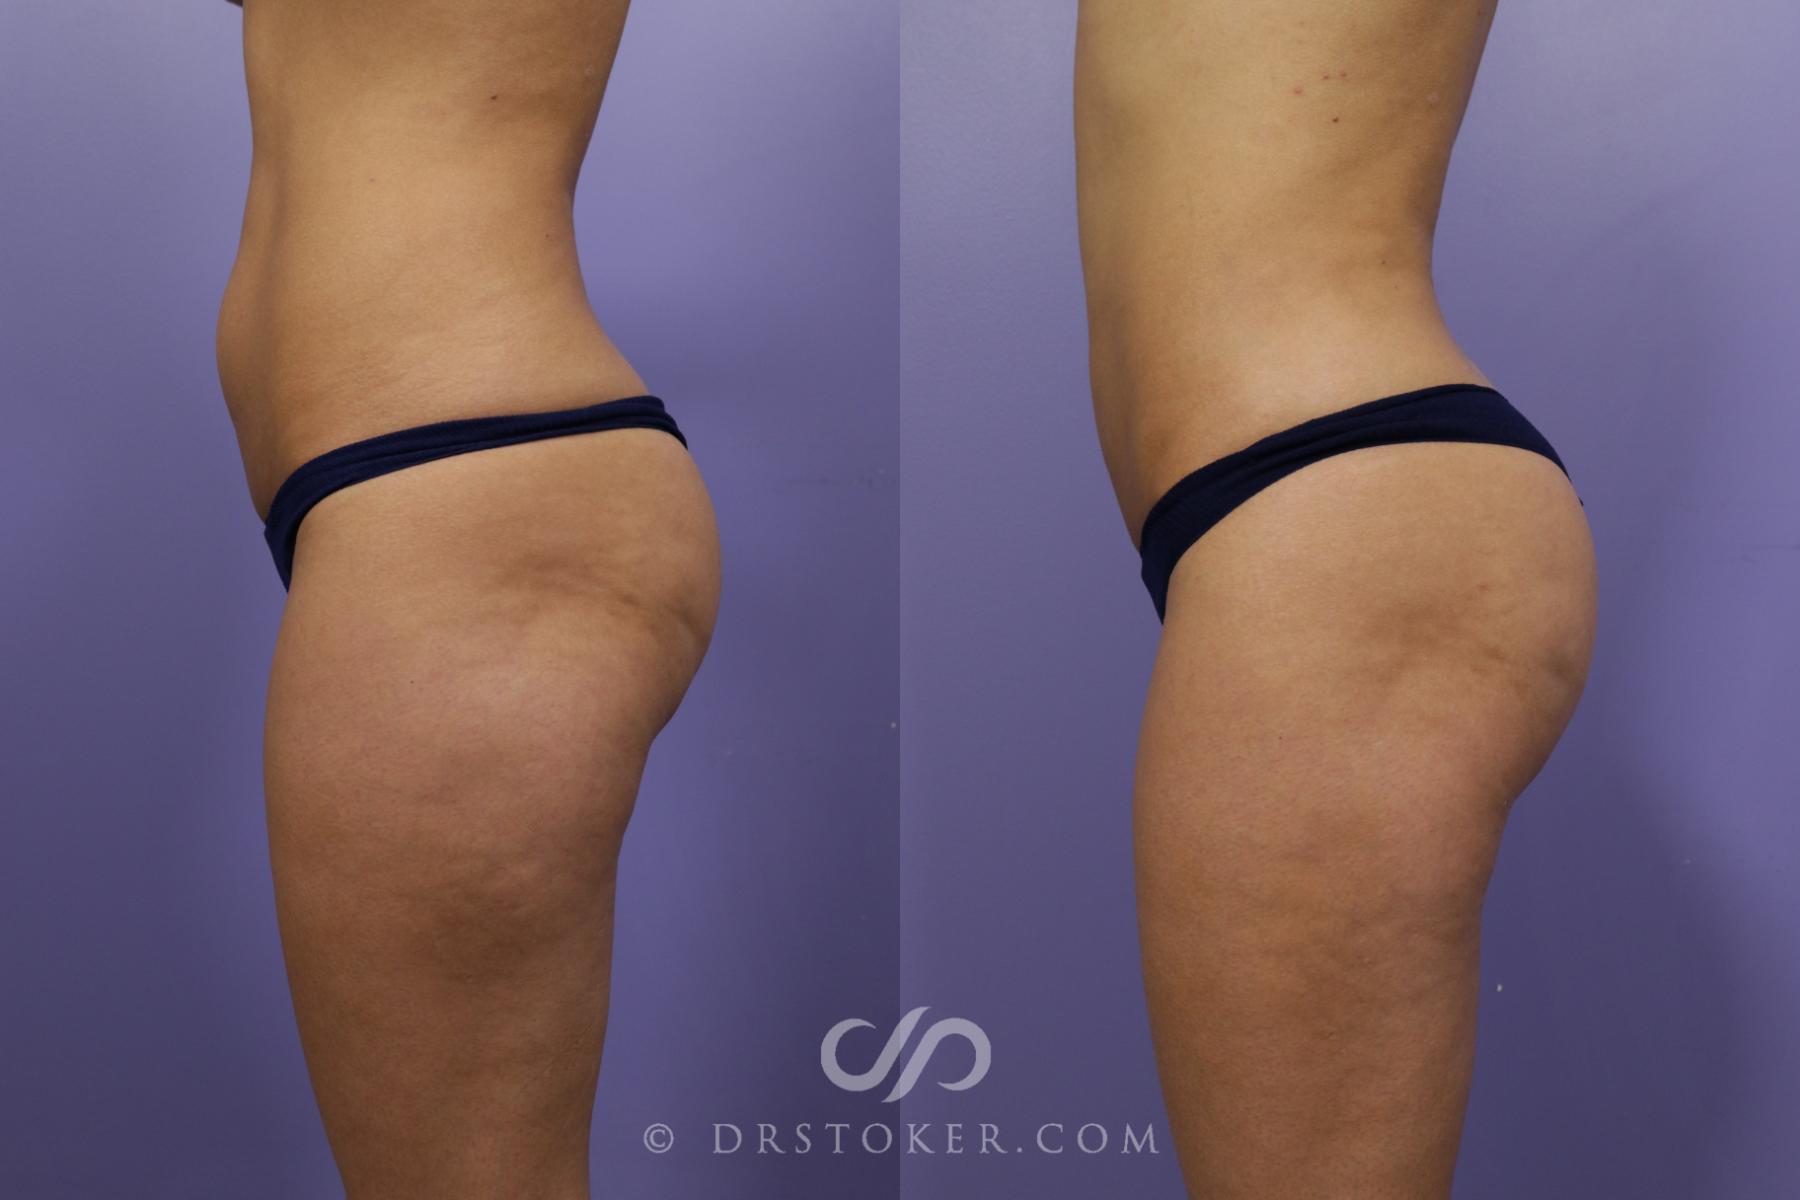 Brazilian Butt Lift Before & After Gallery: Patient 24